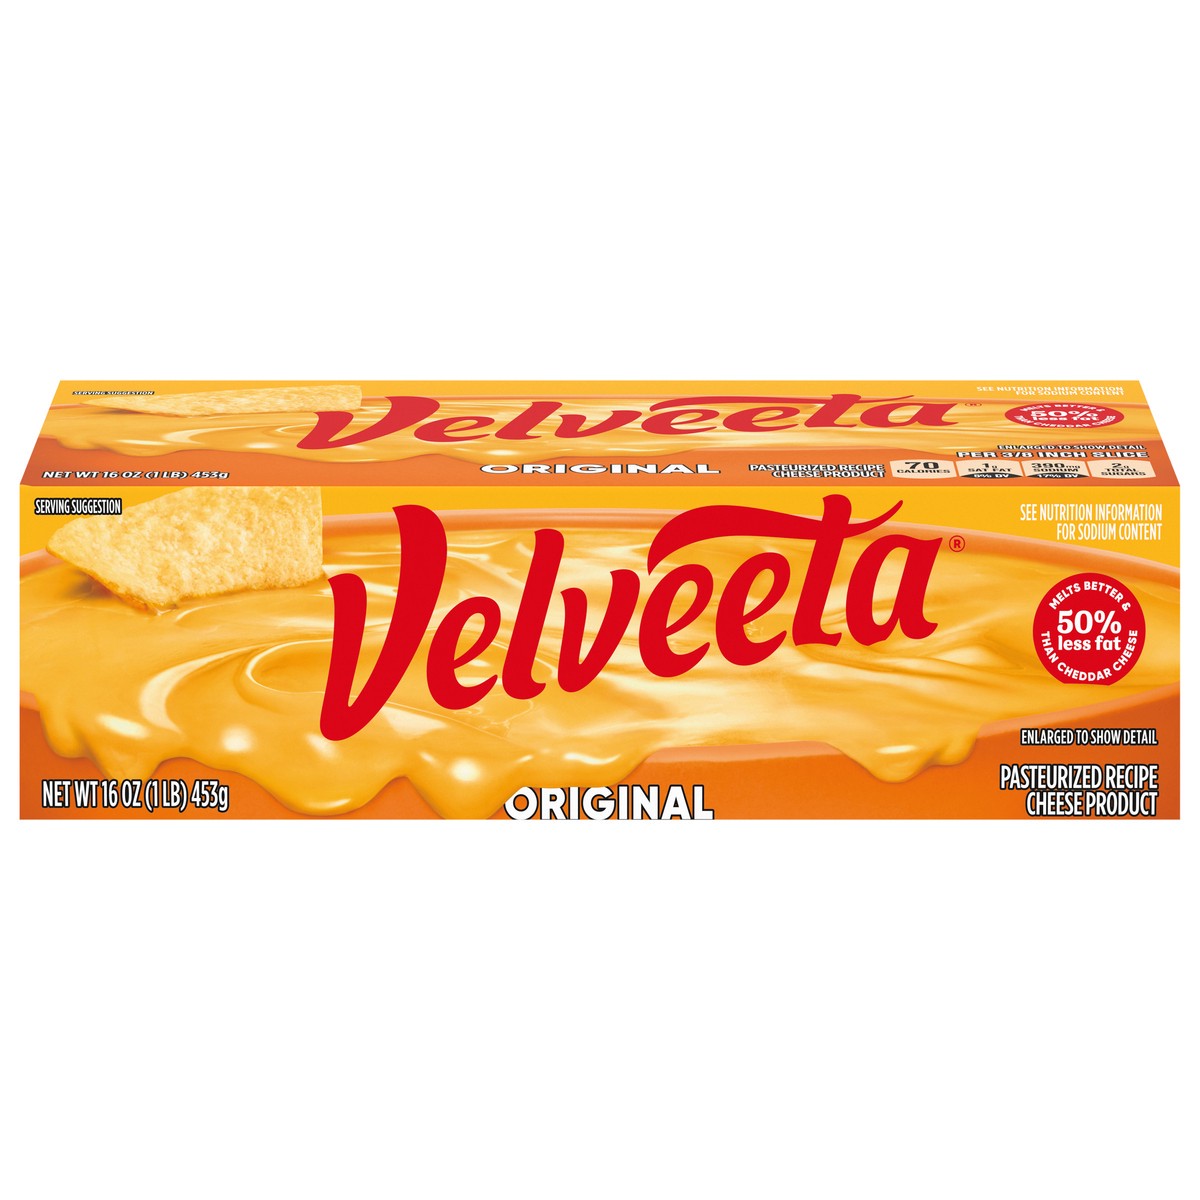 slide 1 of 9, Velveeta Original Pasteurized Recipe Cheese Product, 16 oz Block, 16 oz